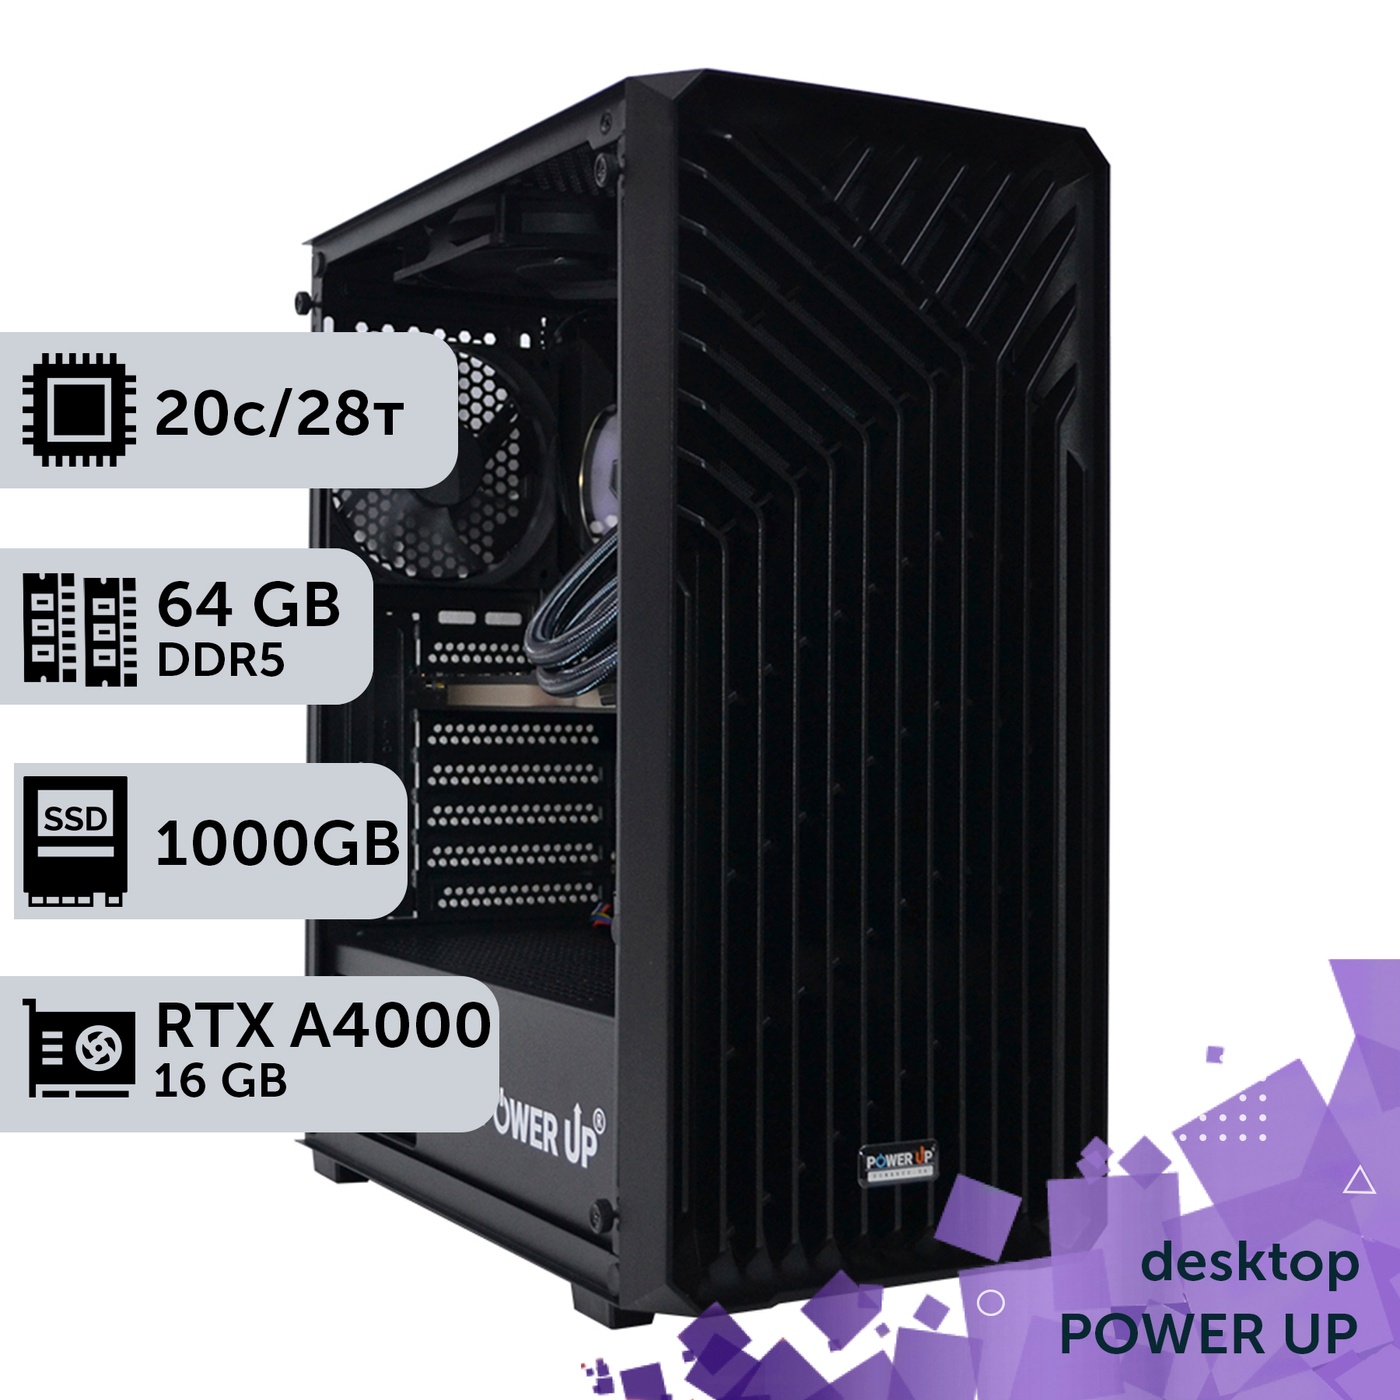 Робоча станція PowerUp Desktop #319 Core i7 14700K/64 GB/SSD 1TB/NVIDIA Quadro RTX A4000 16GB